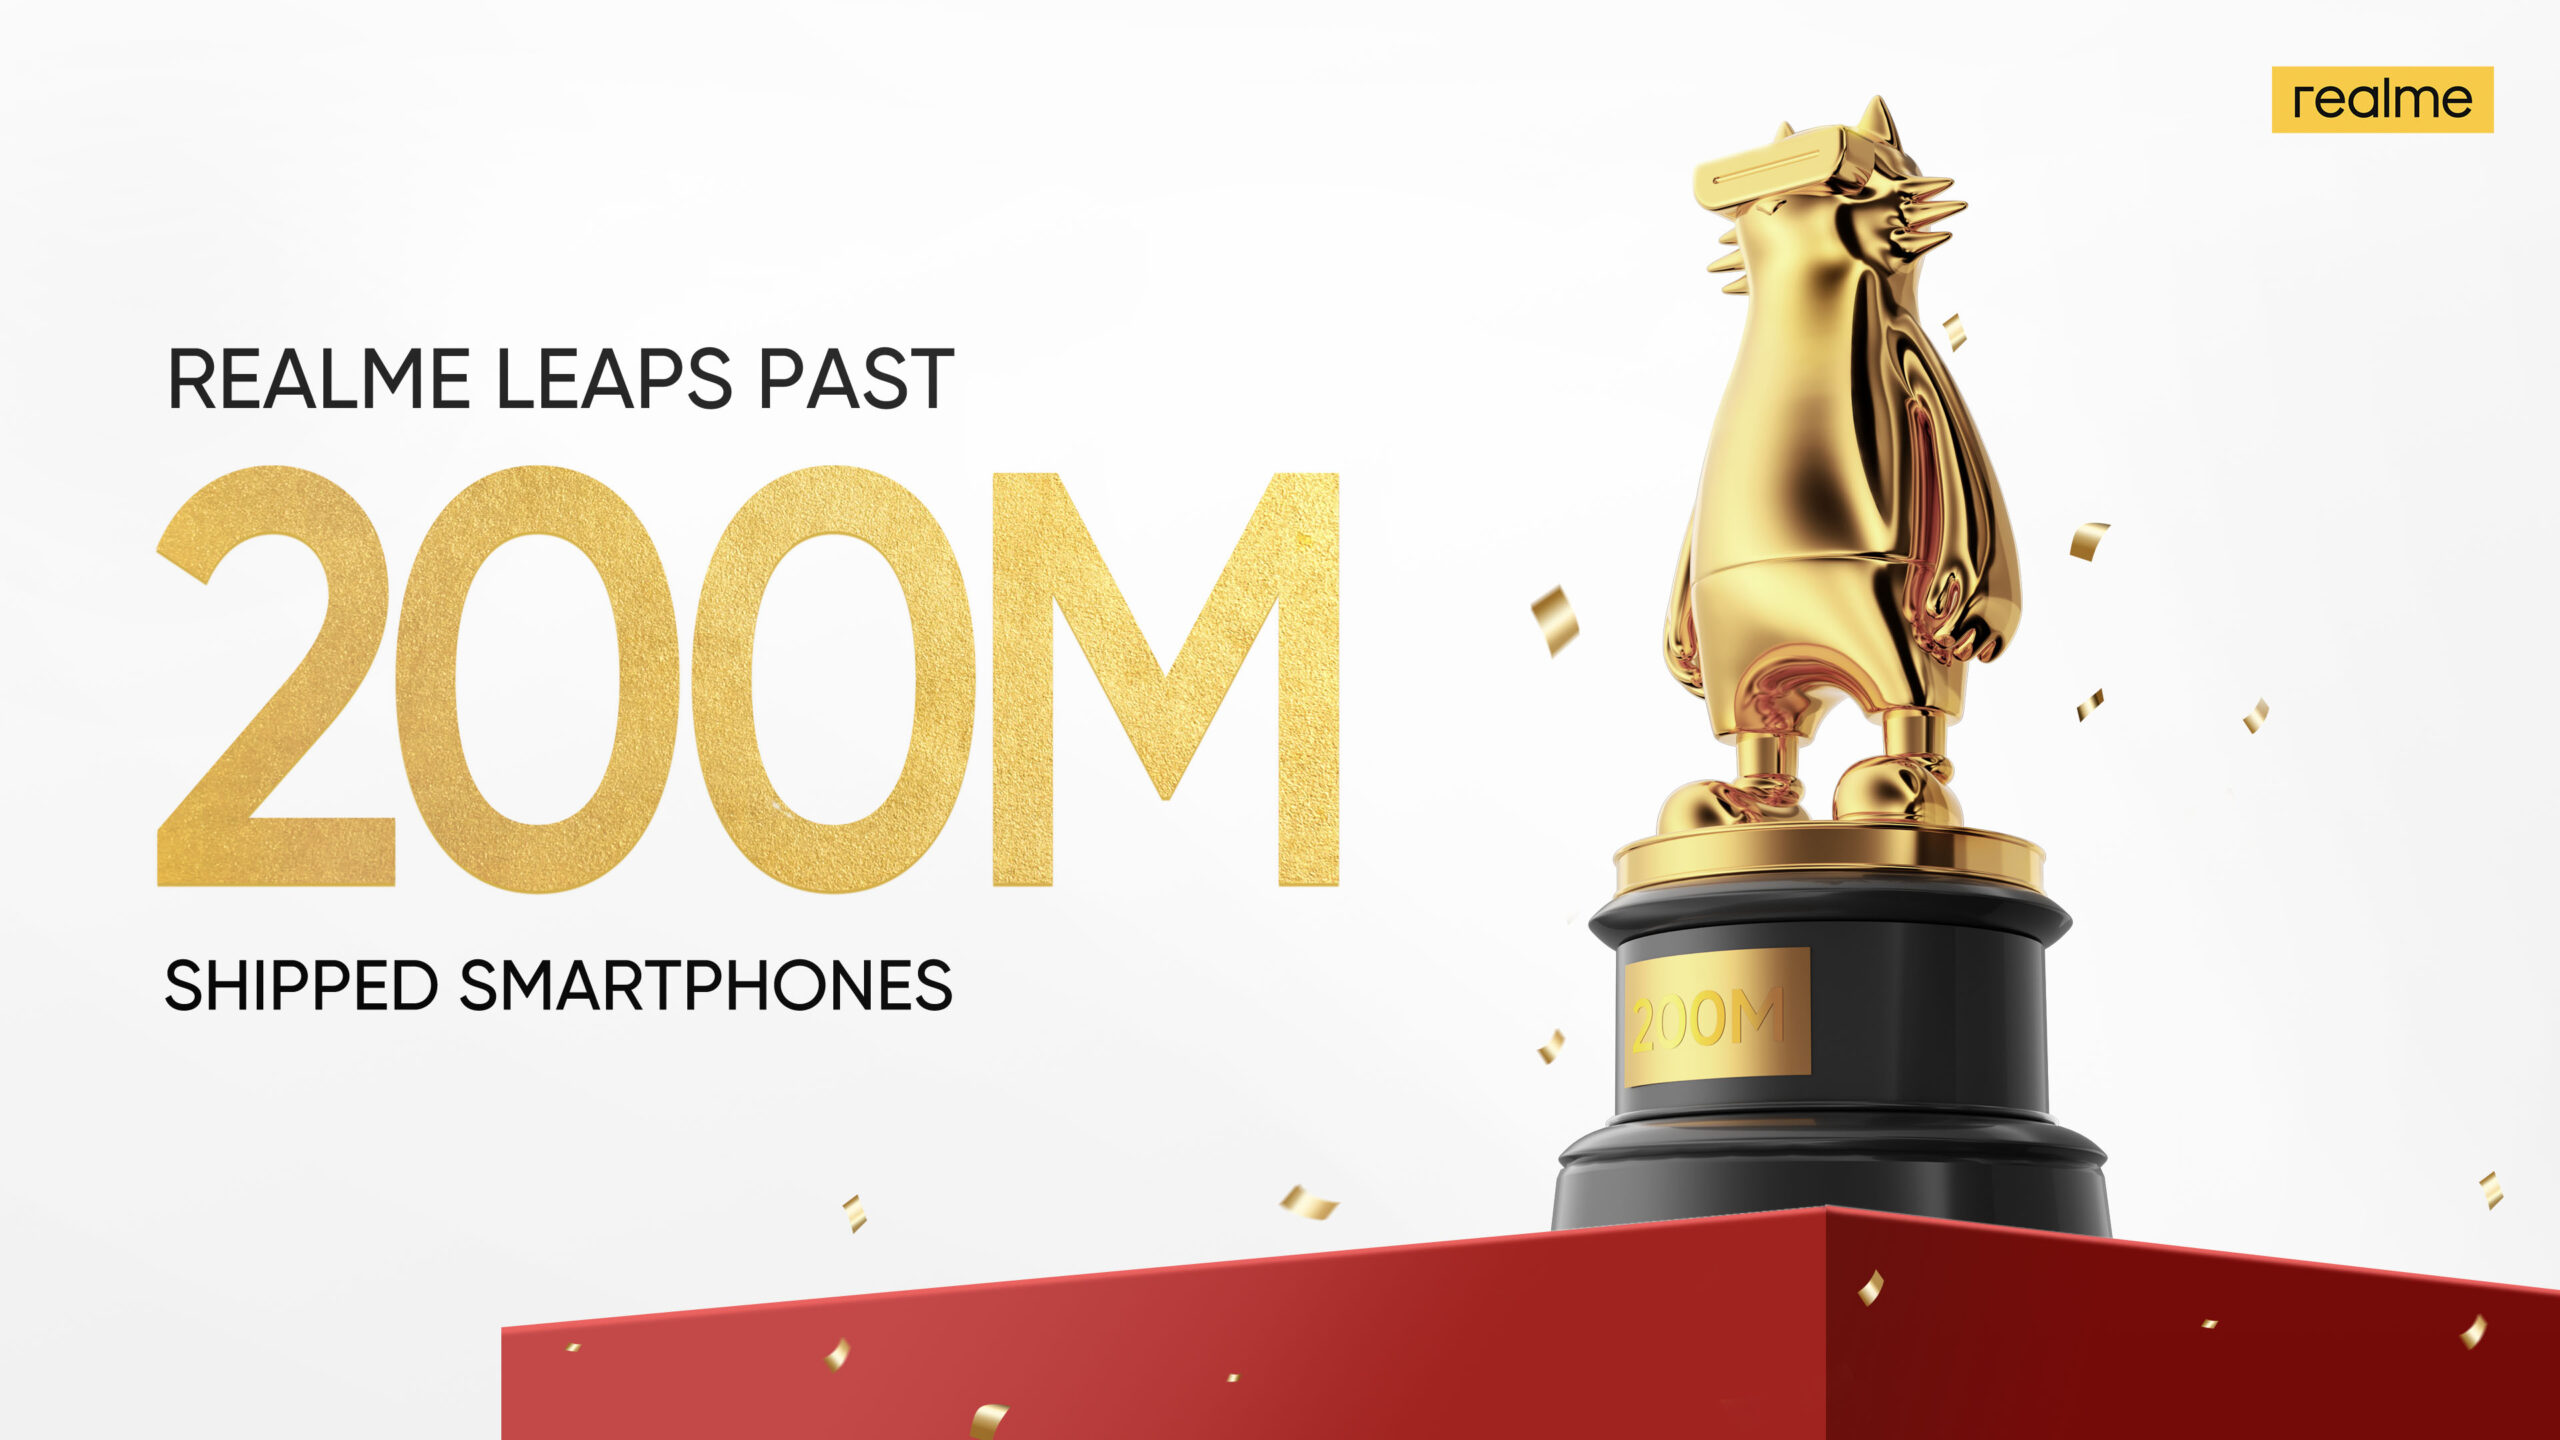 realme's global smartphone shipment surpassed 200 million units!